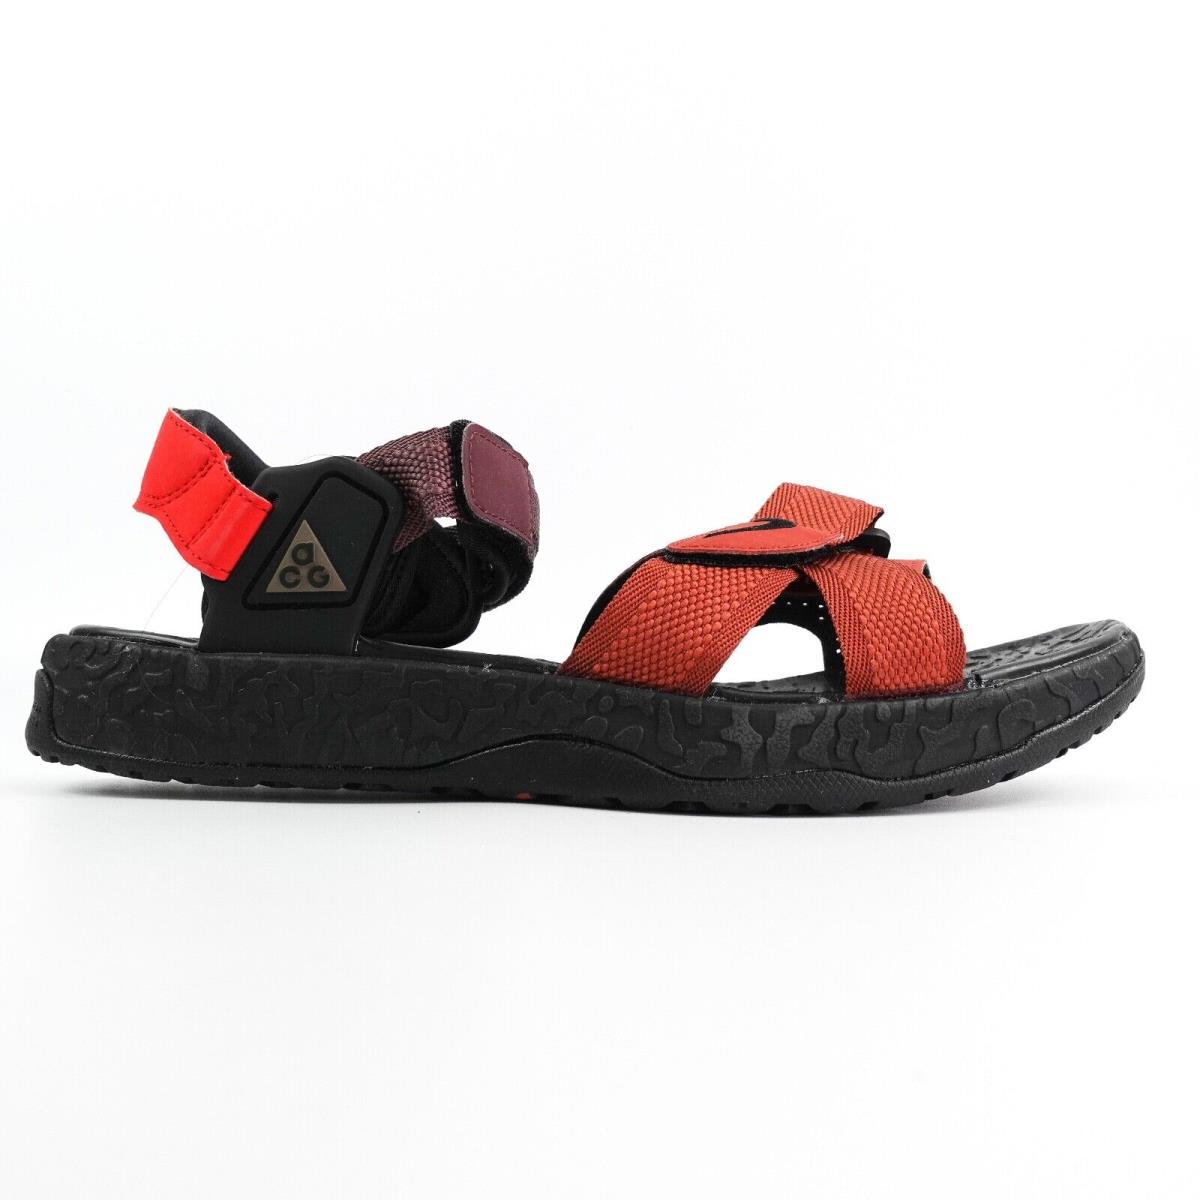 Nike Acg Air Deschutz + Sandal Slipper Shoes Red Stone Black DC9092-600 Size 9